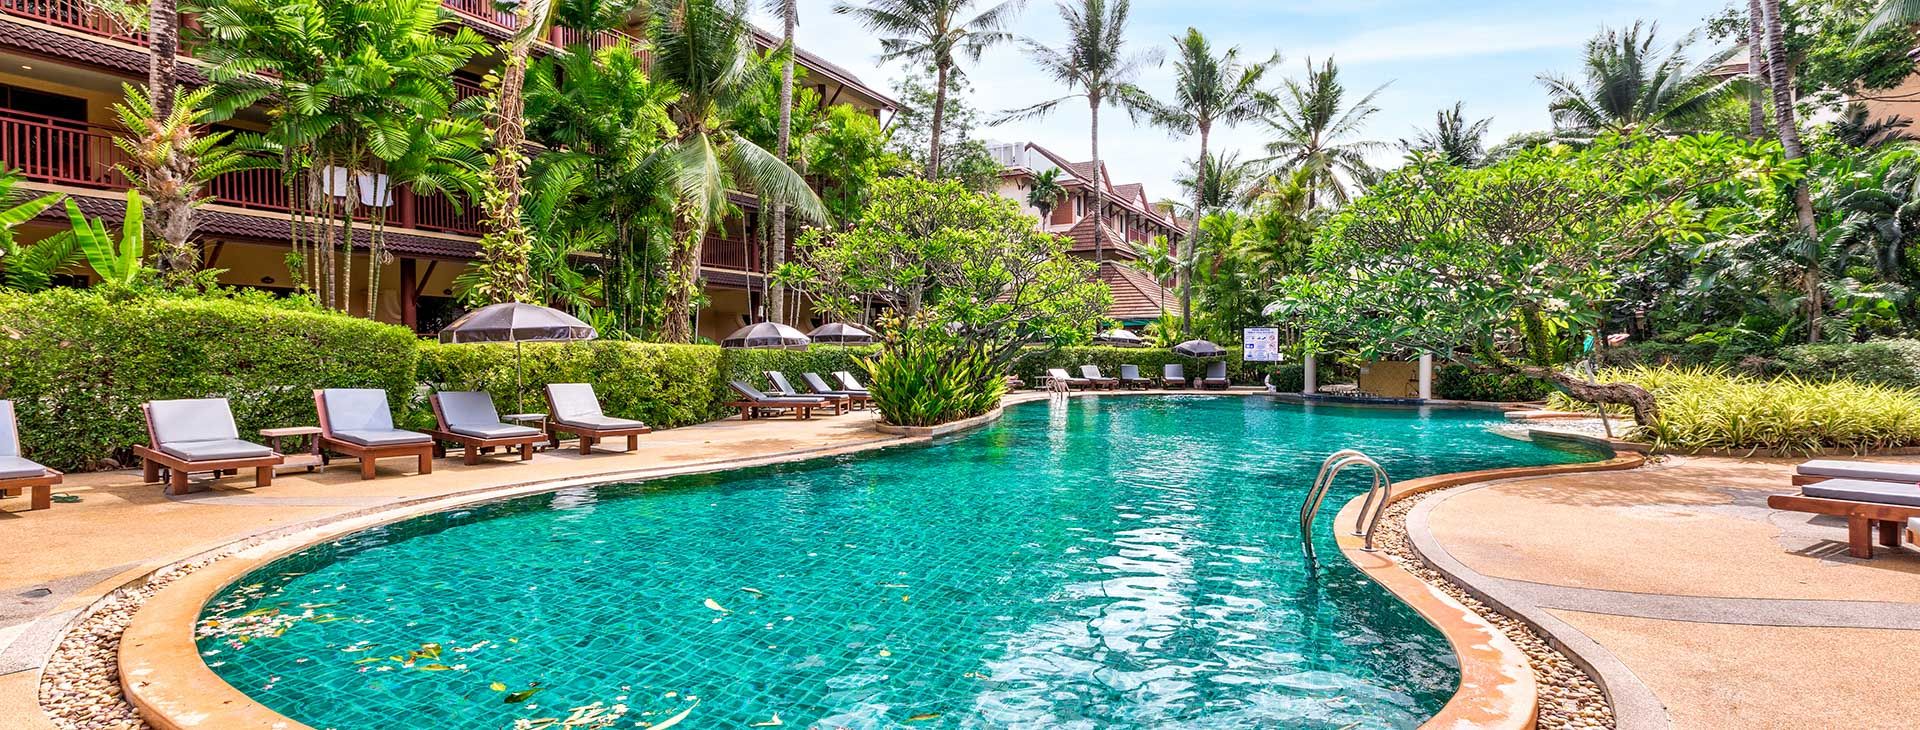 Kata Palm Resort & Spa - hotel Tajlandia  - Zdjęcie 1